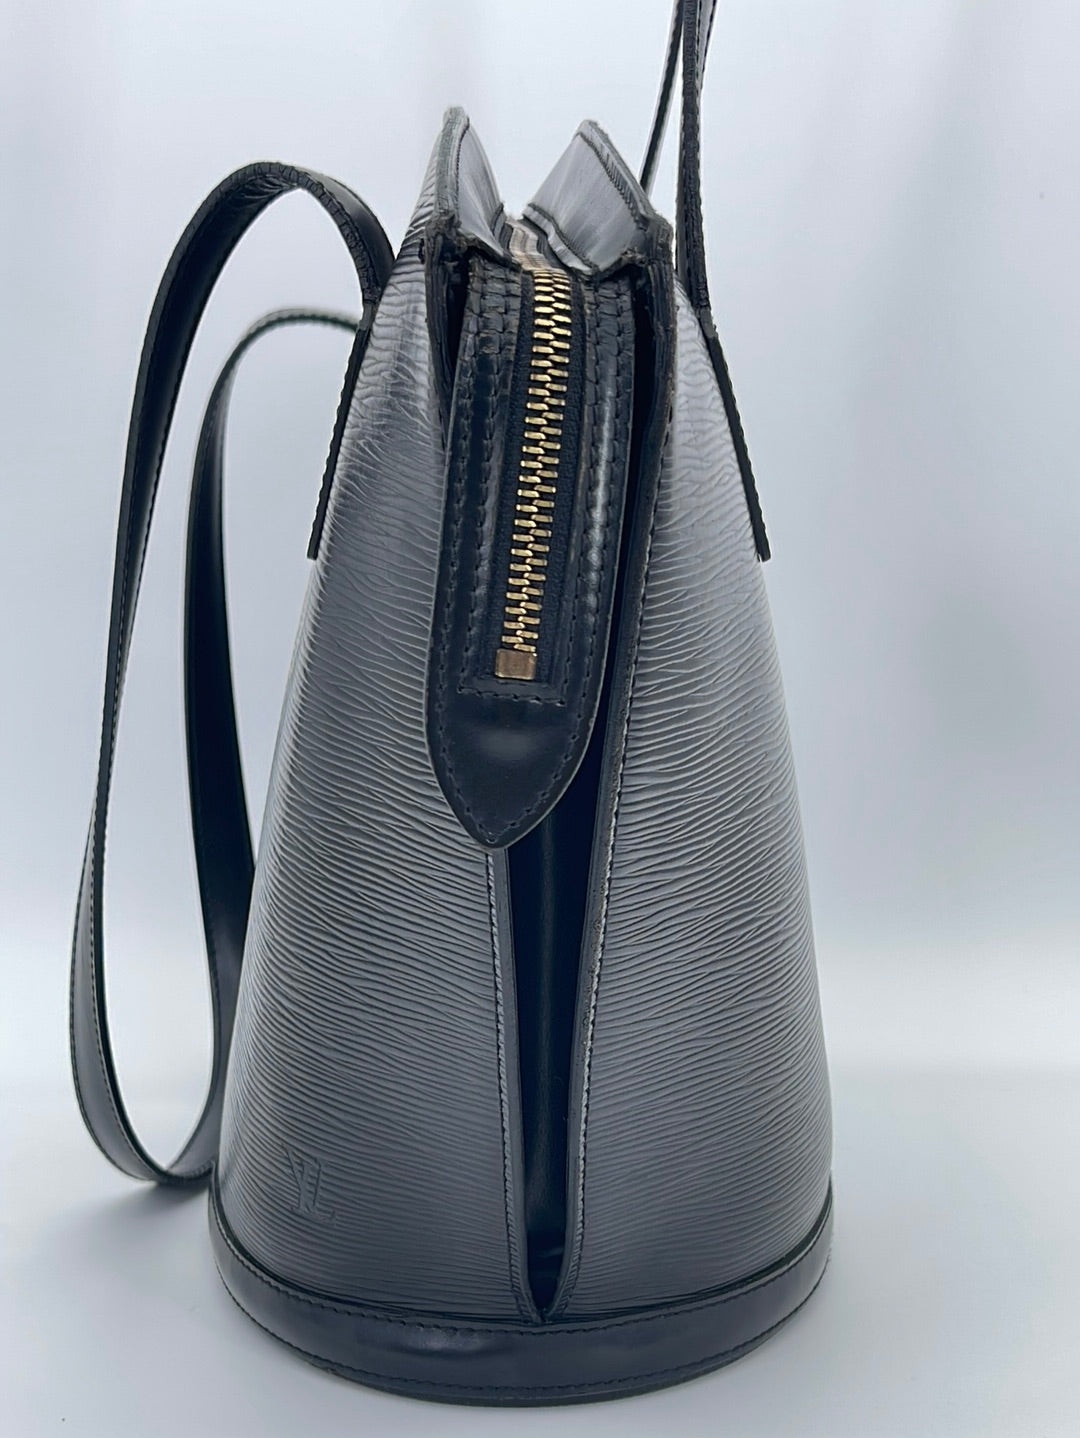 Louis Vuitton Black Epi Leather Clutch – The Don's Luxury Goods